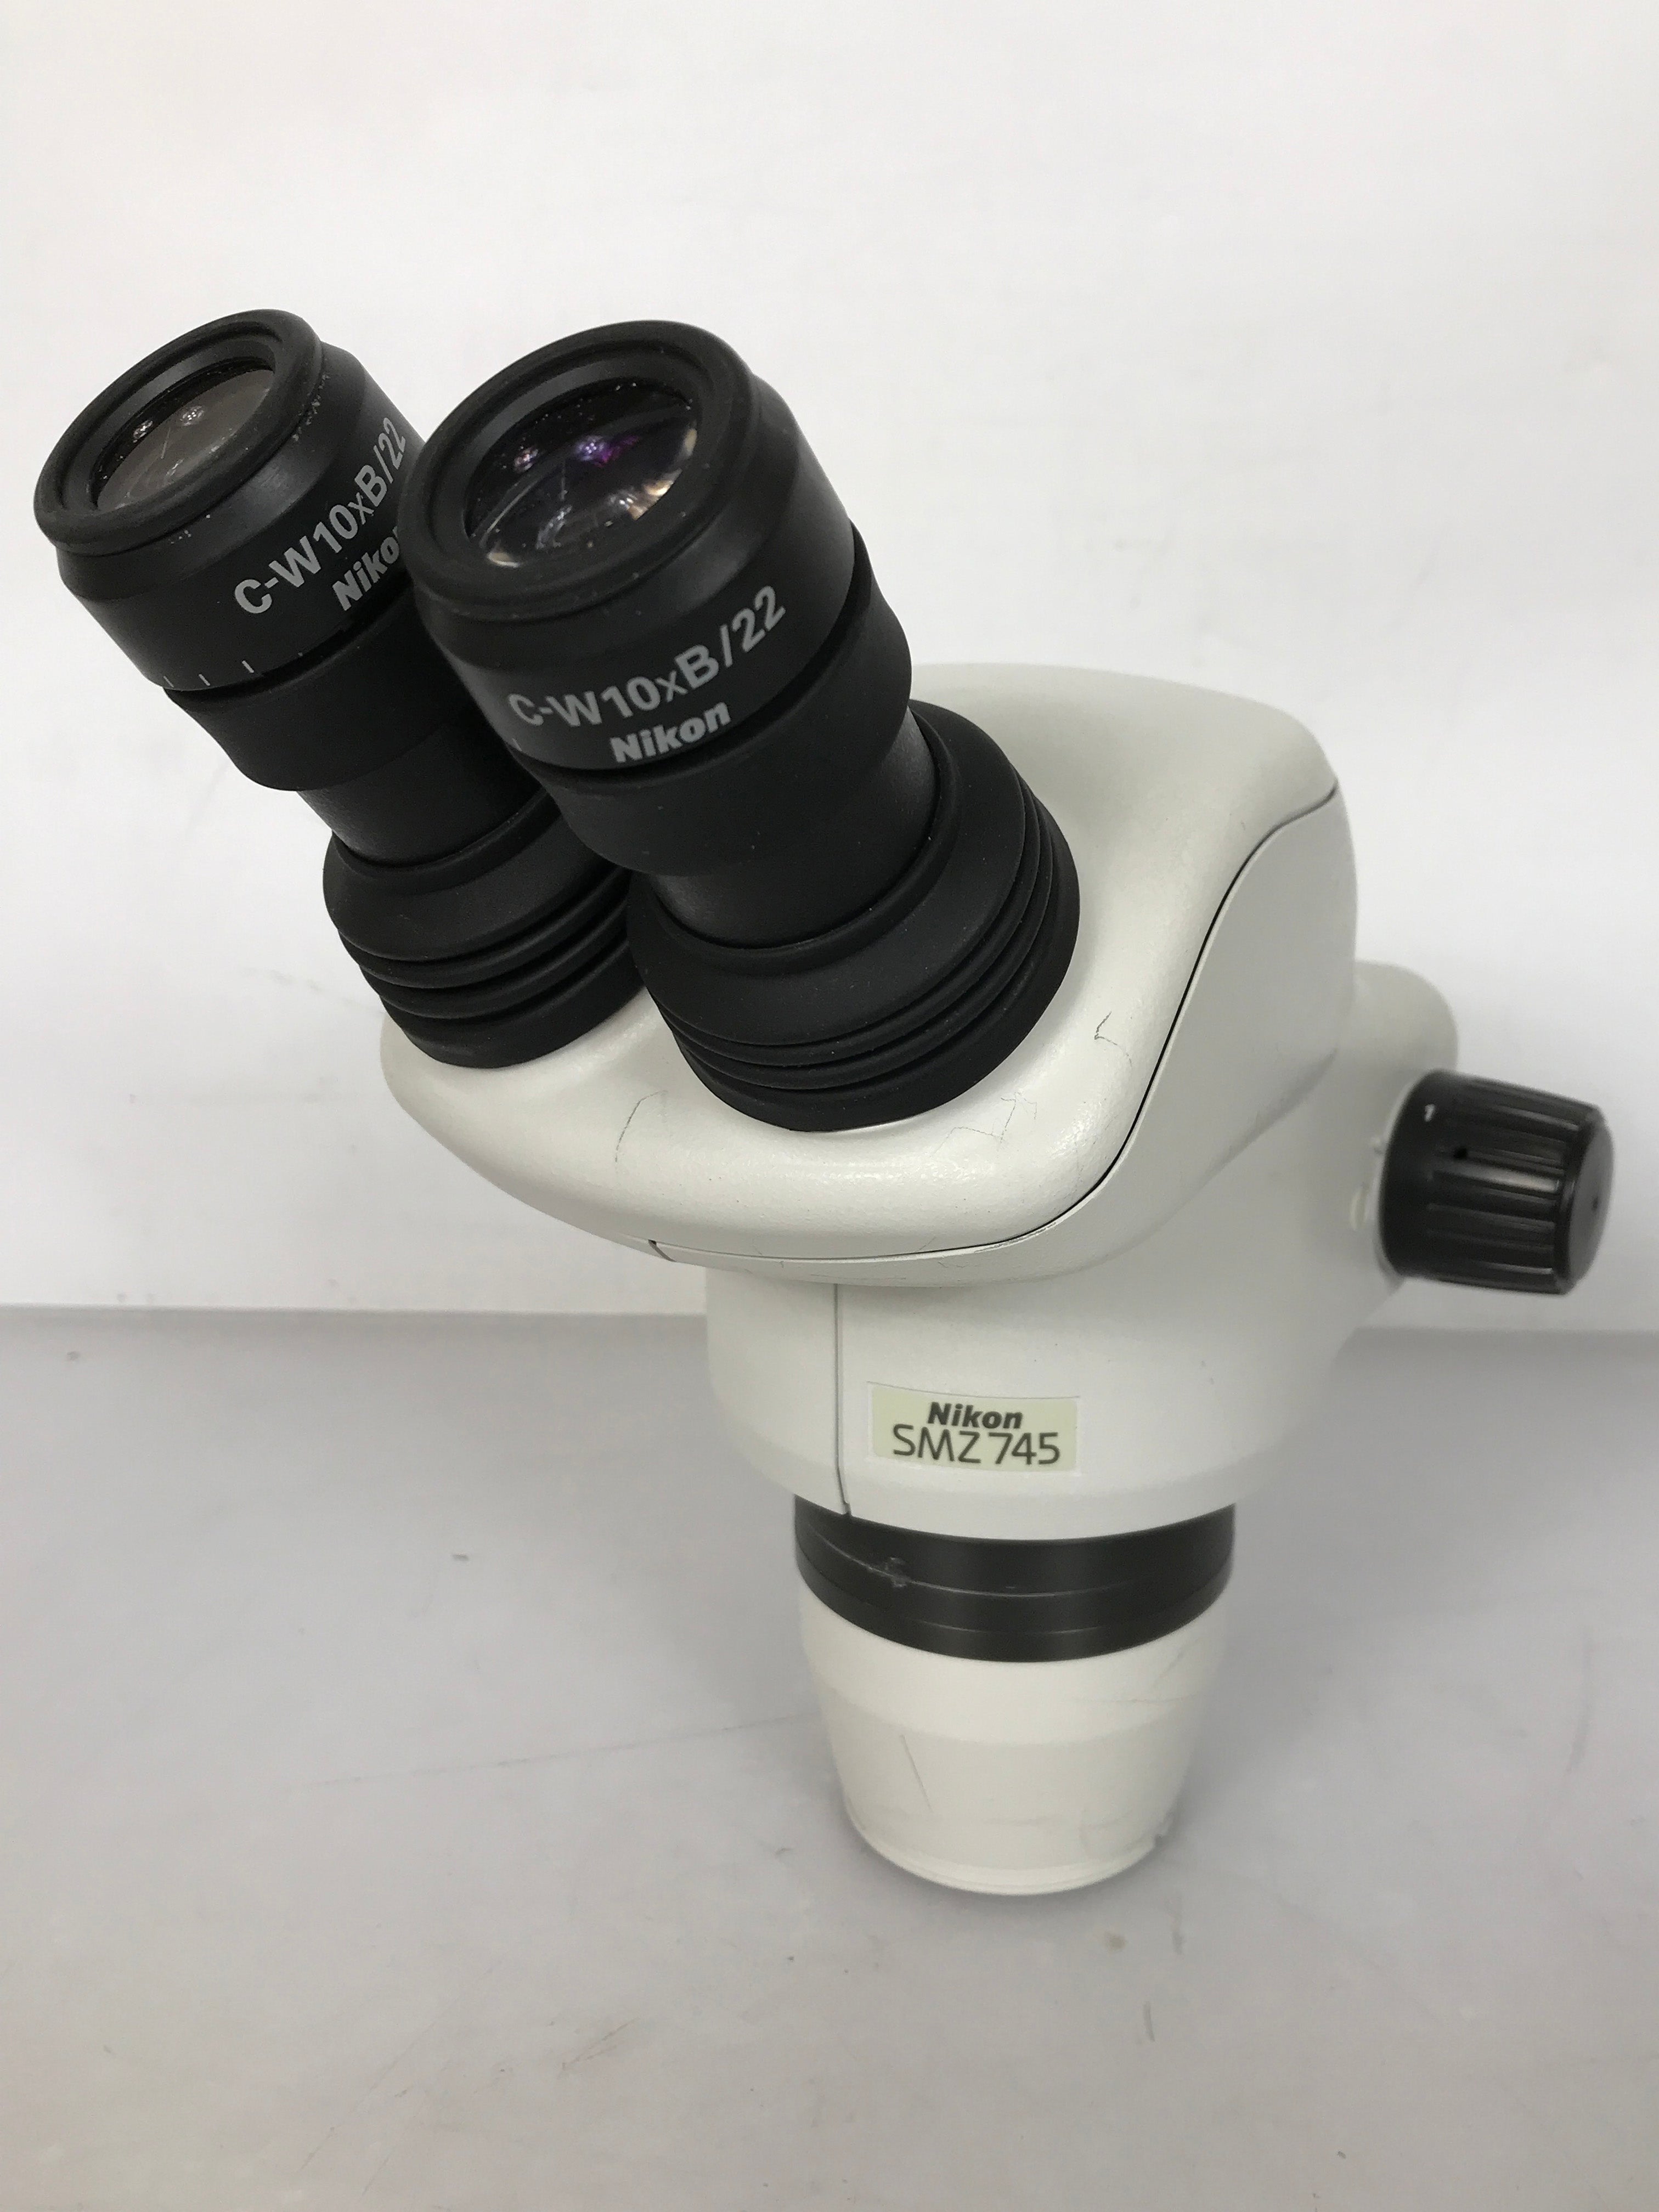 Nikon SMZ 745 Stereozoom Microscope Head *For Parts or Repair*